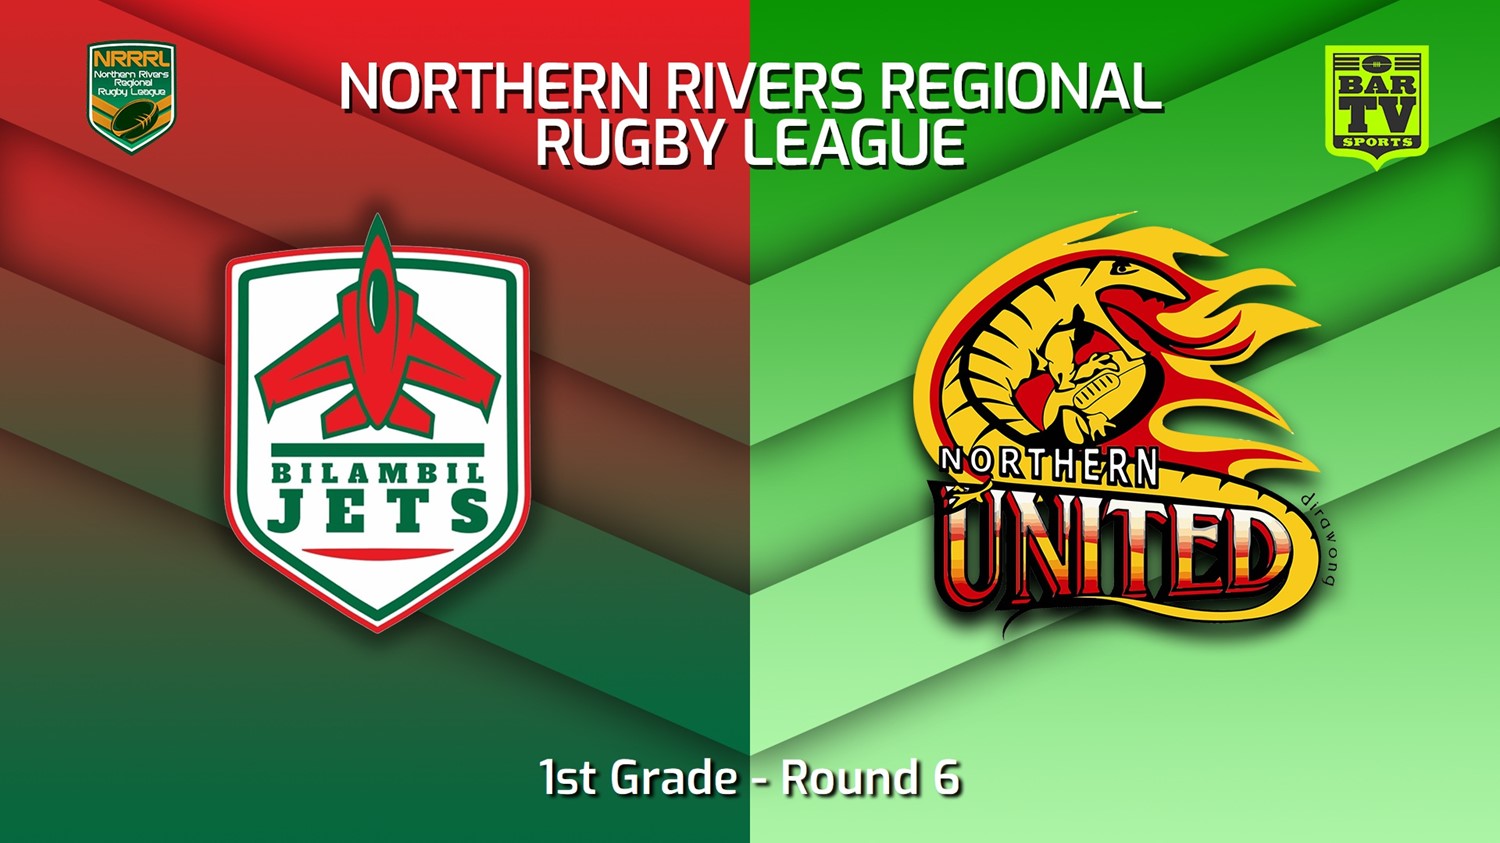 230521-Northern Rivers Round 6 - 1st Grade - Bilambil Jets v Northern United Minigame Slate Image